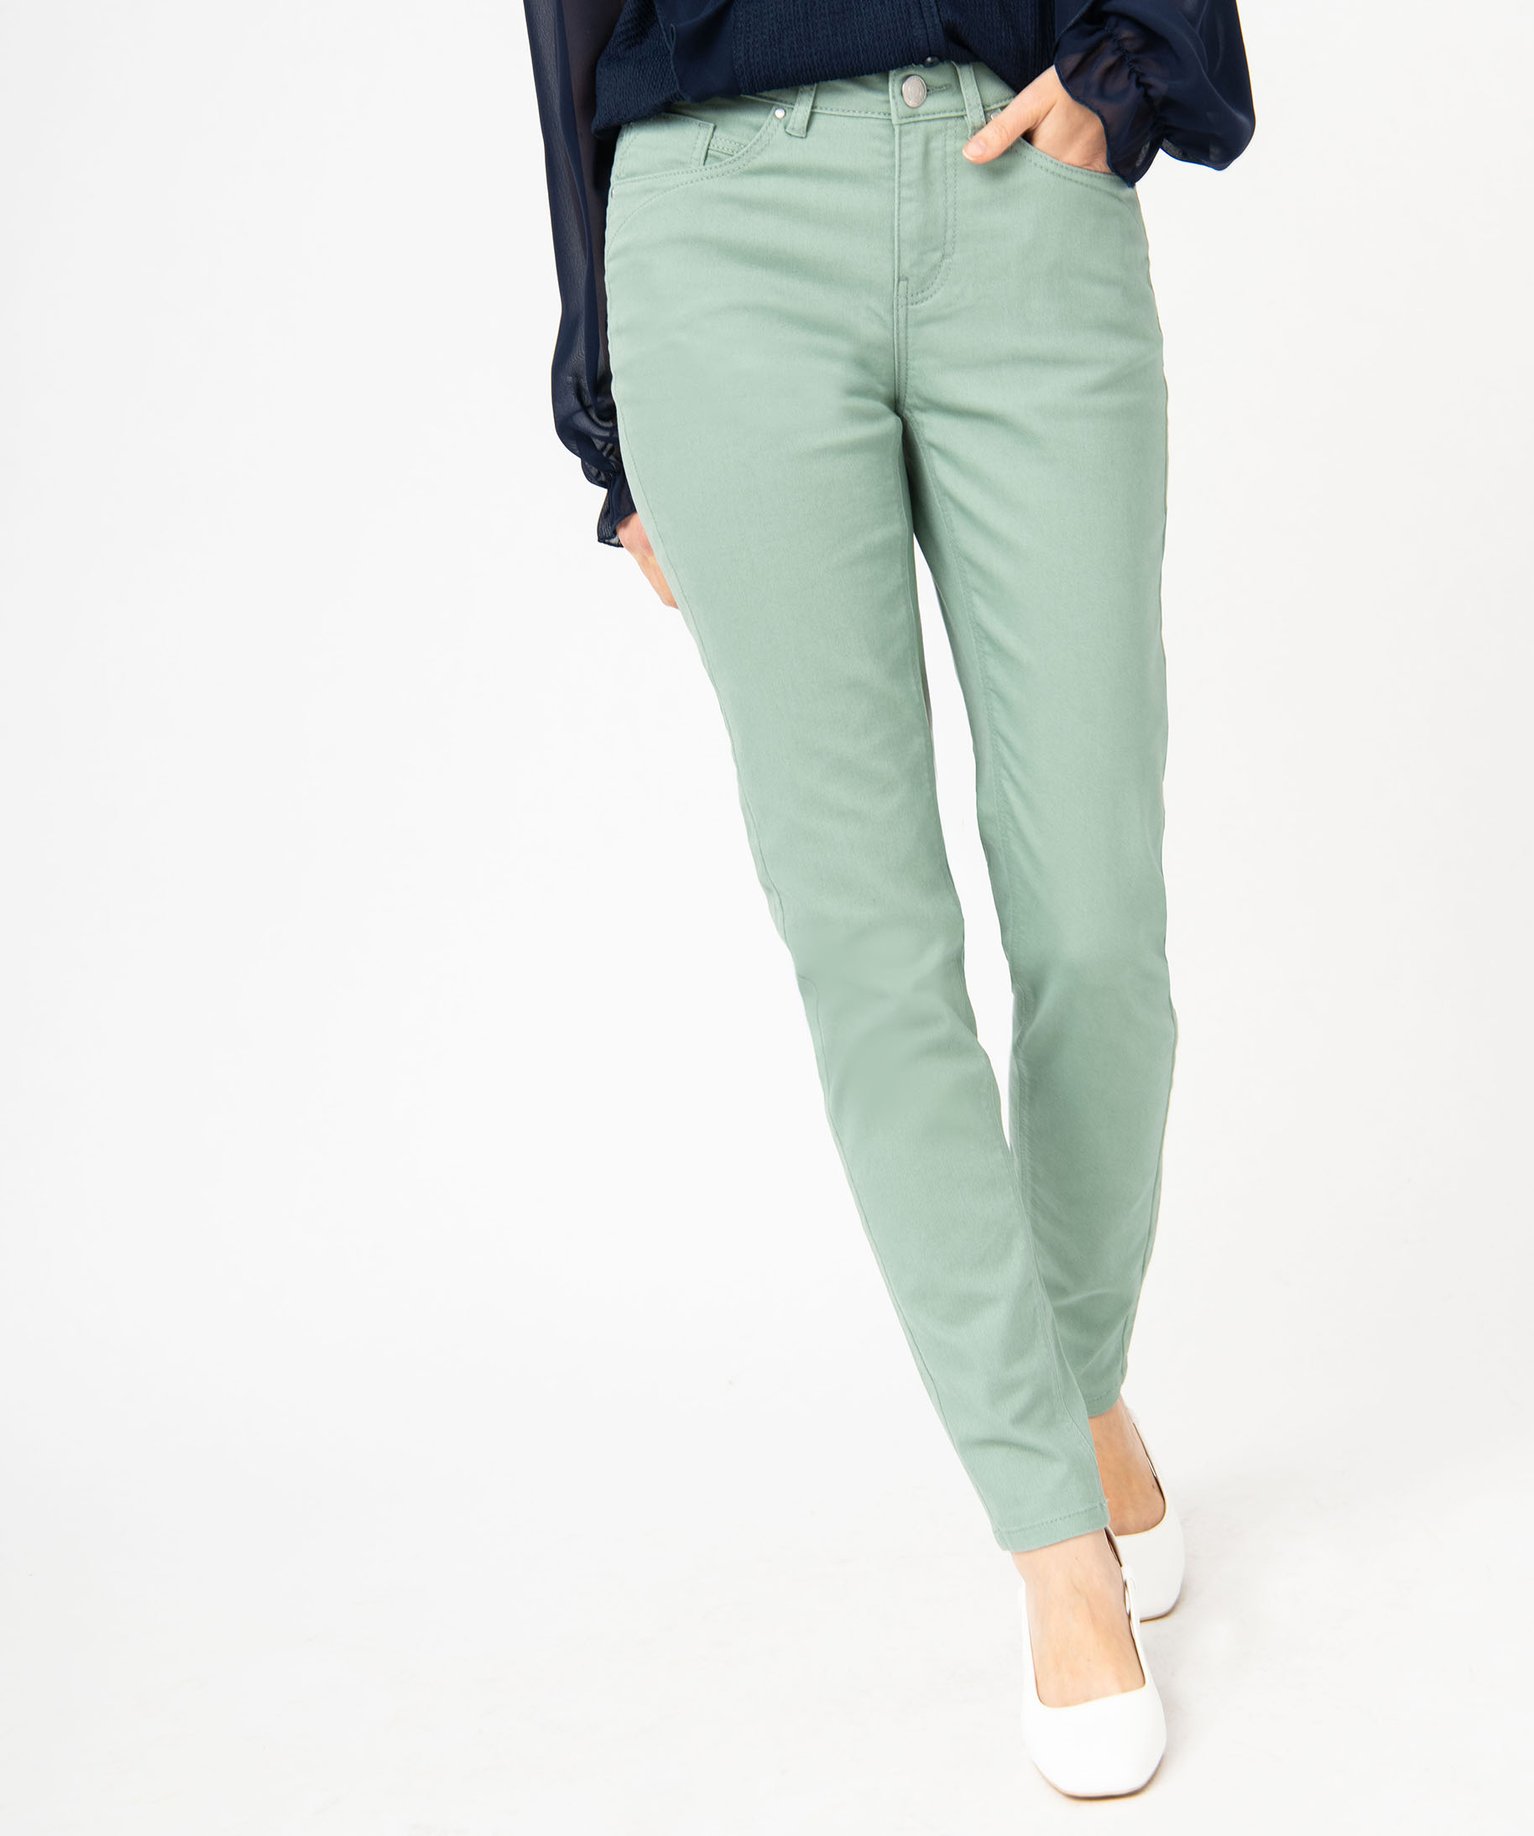 pantalon coupe slim taille normale femme vert pantalons